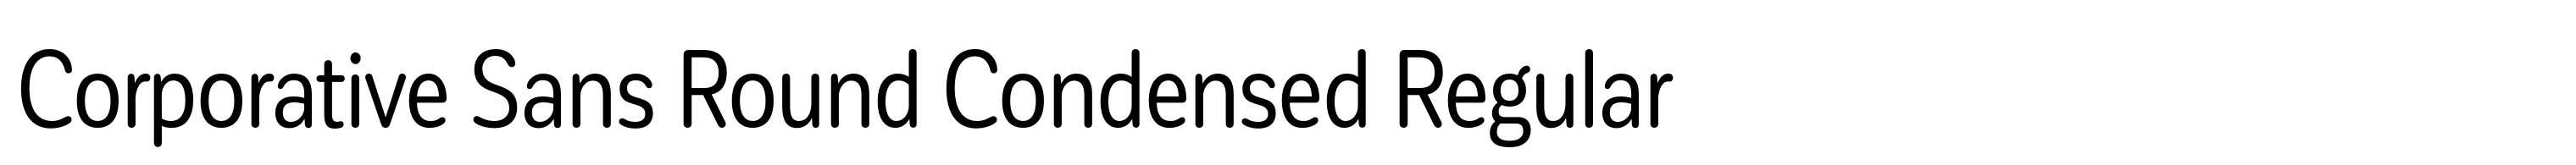 Corporative Sans Round Condensed Regular